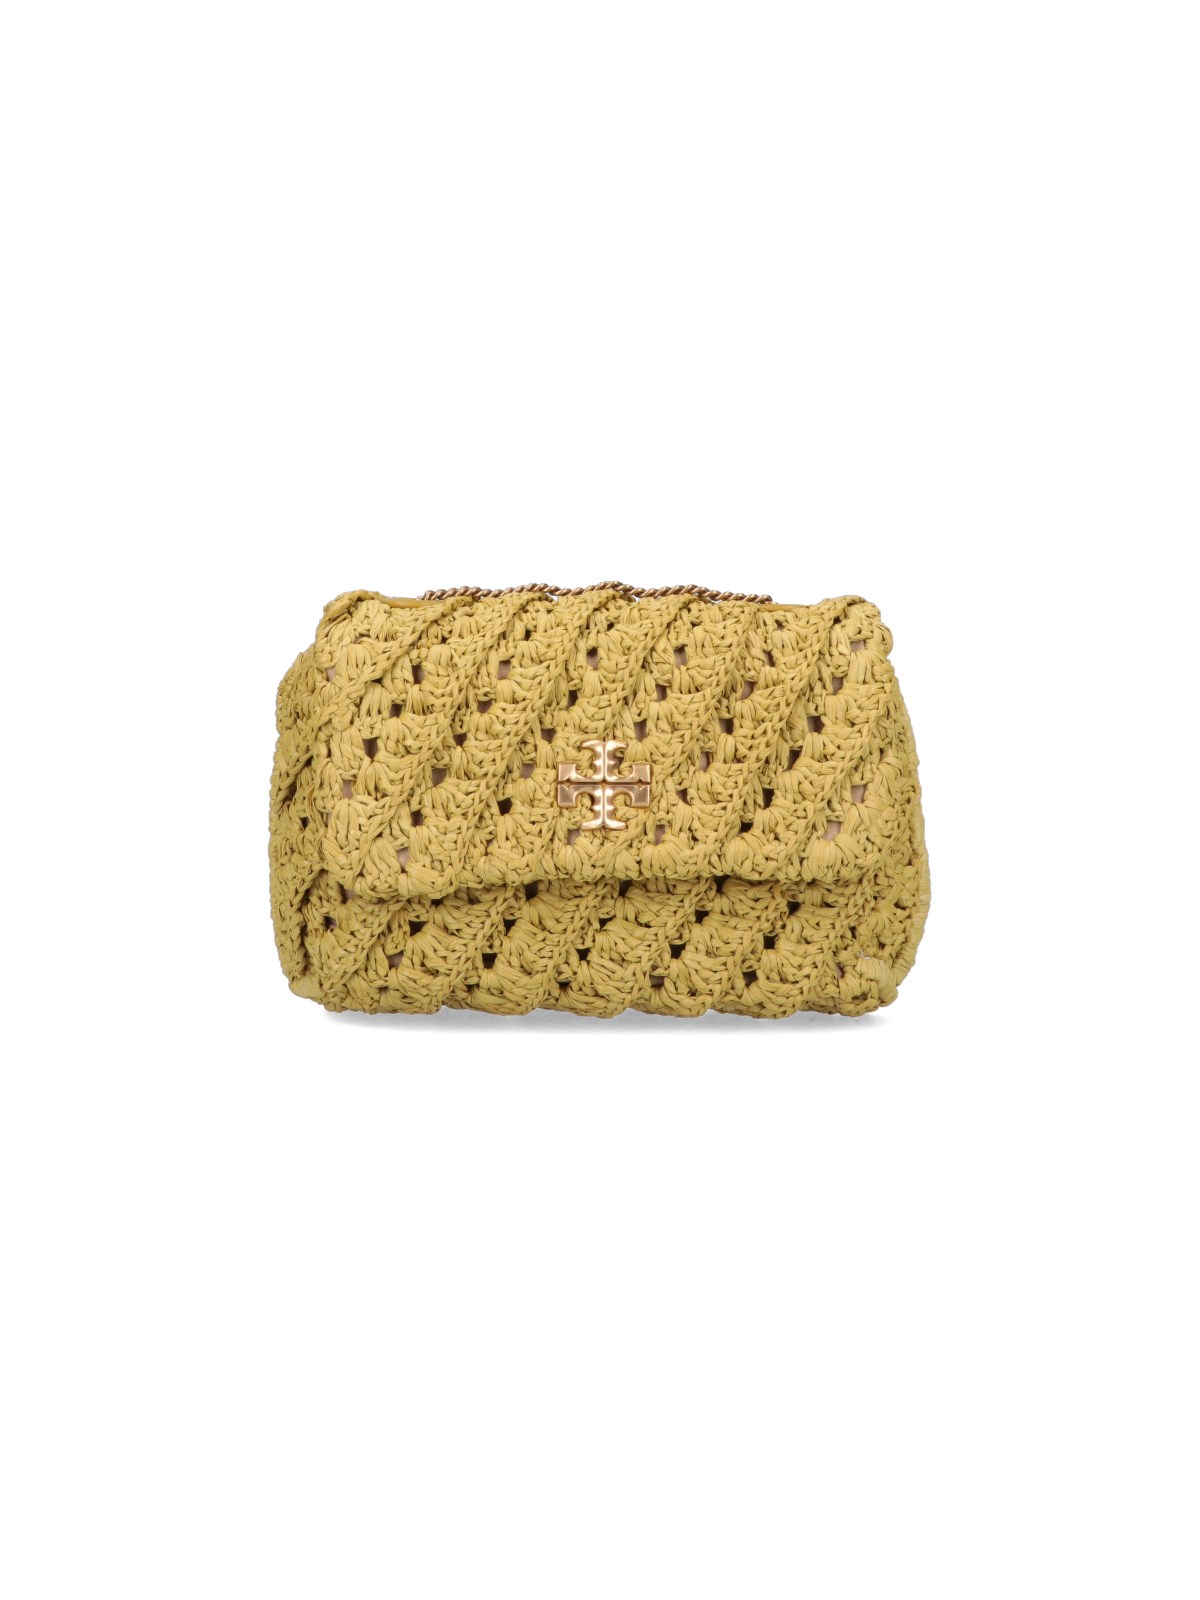 Tory burch 'kira' crochet mini bag available on SUGAR - 55779